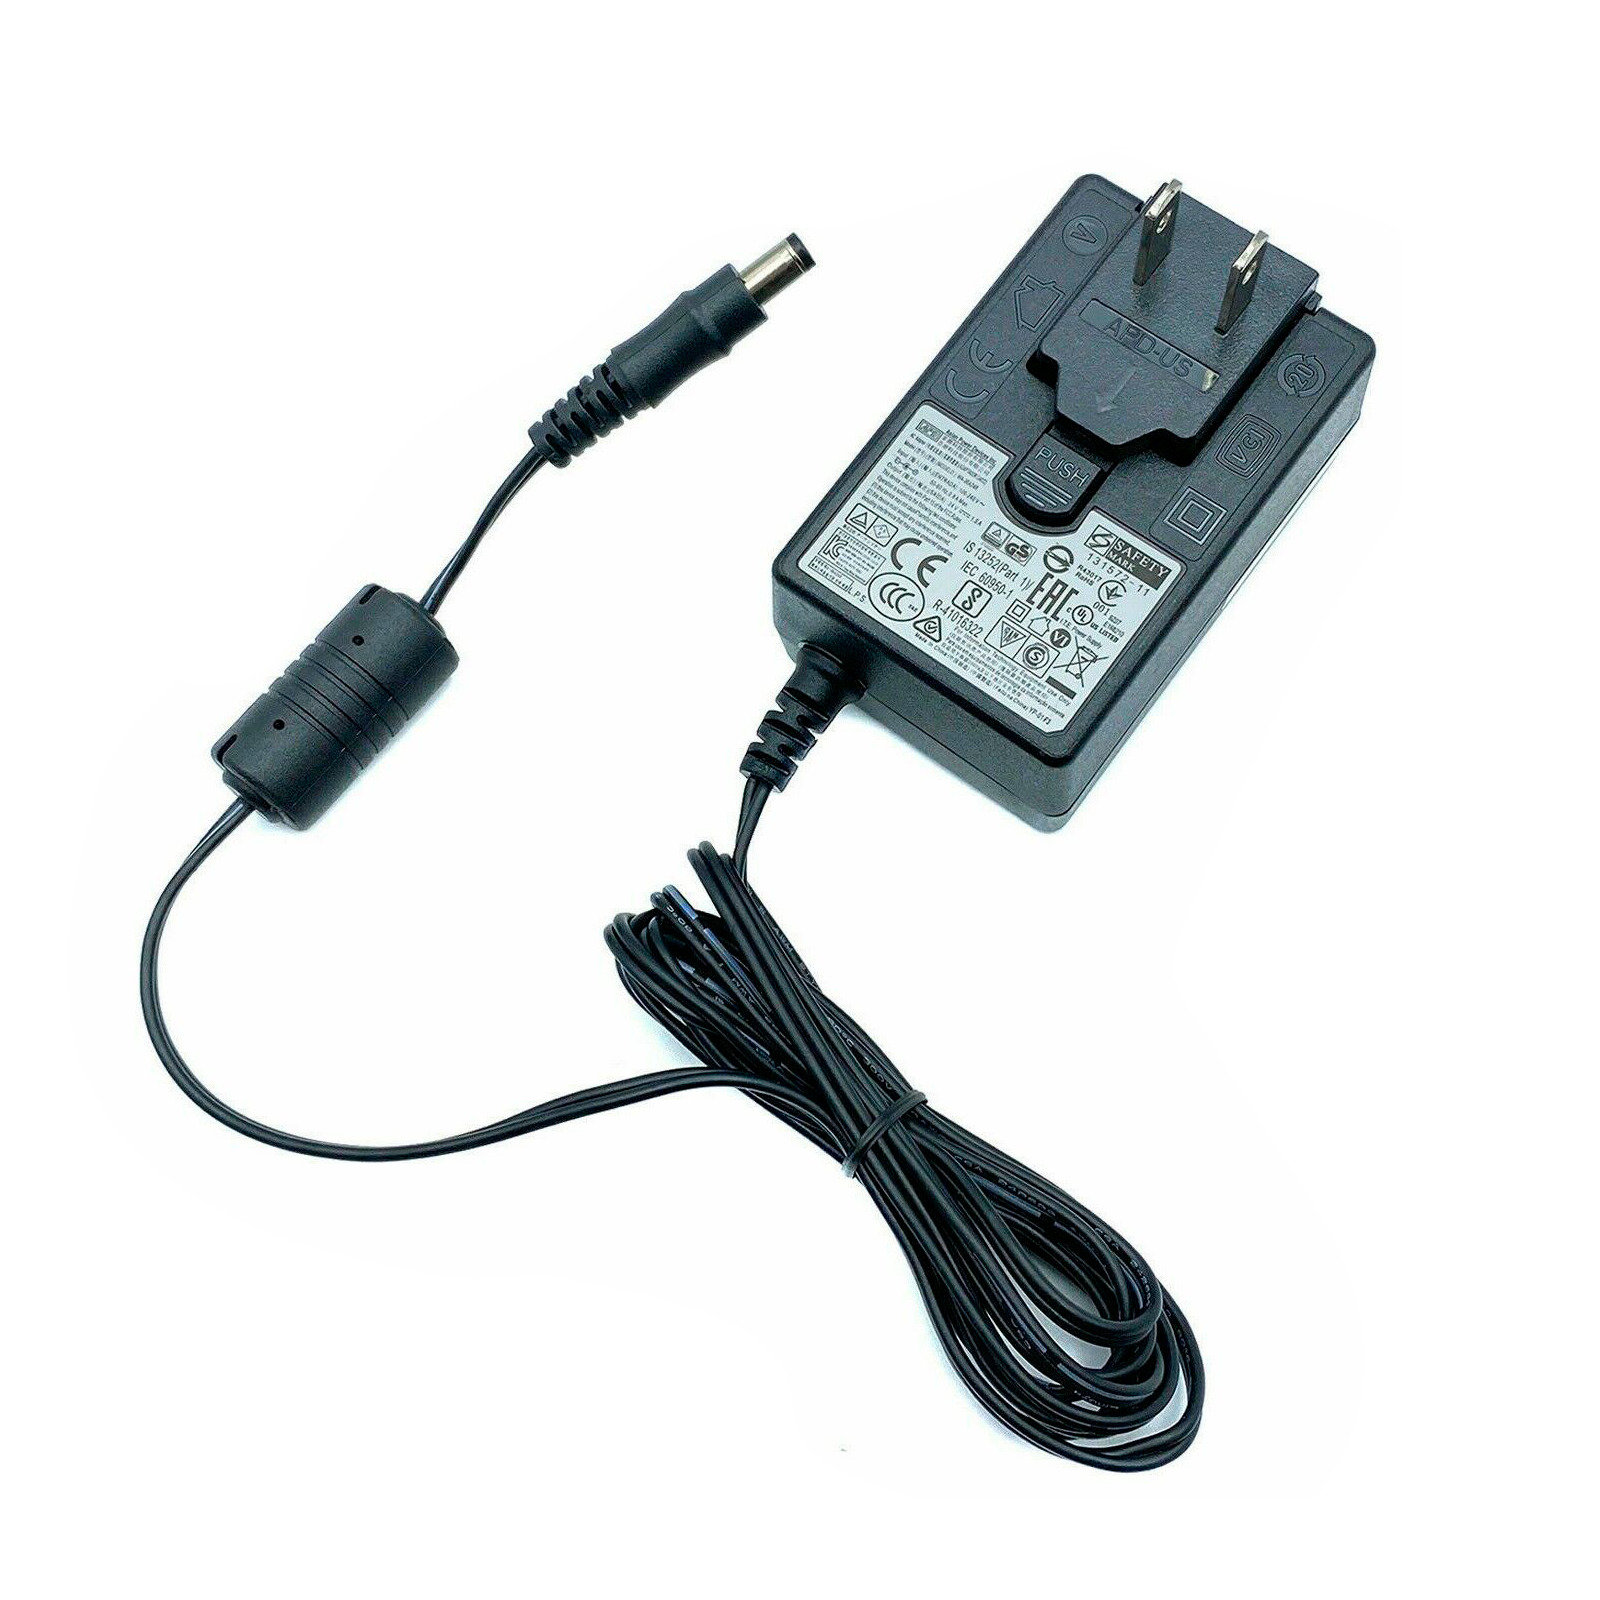 Genuine 24V APD AC Power Adapter for Digital Check SSM1-Microelite Check Scanner